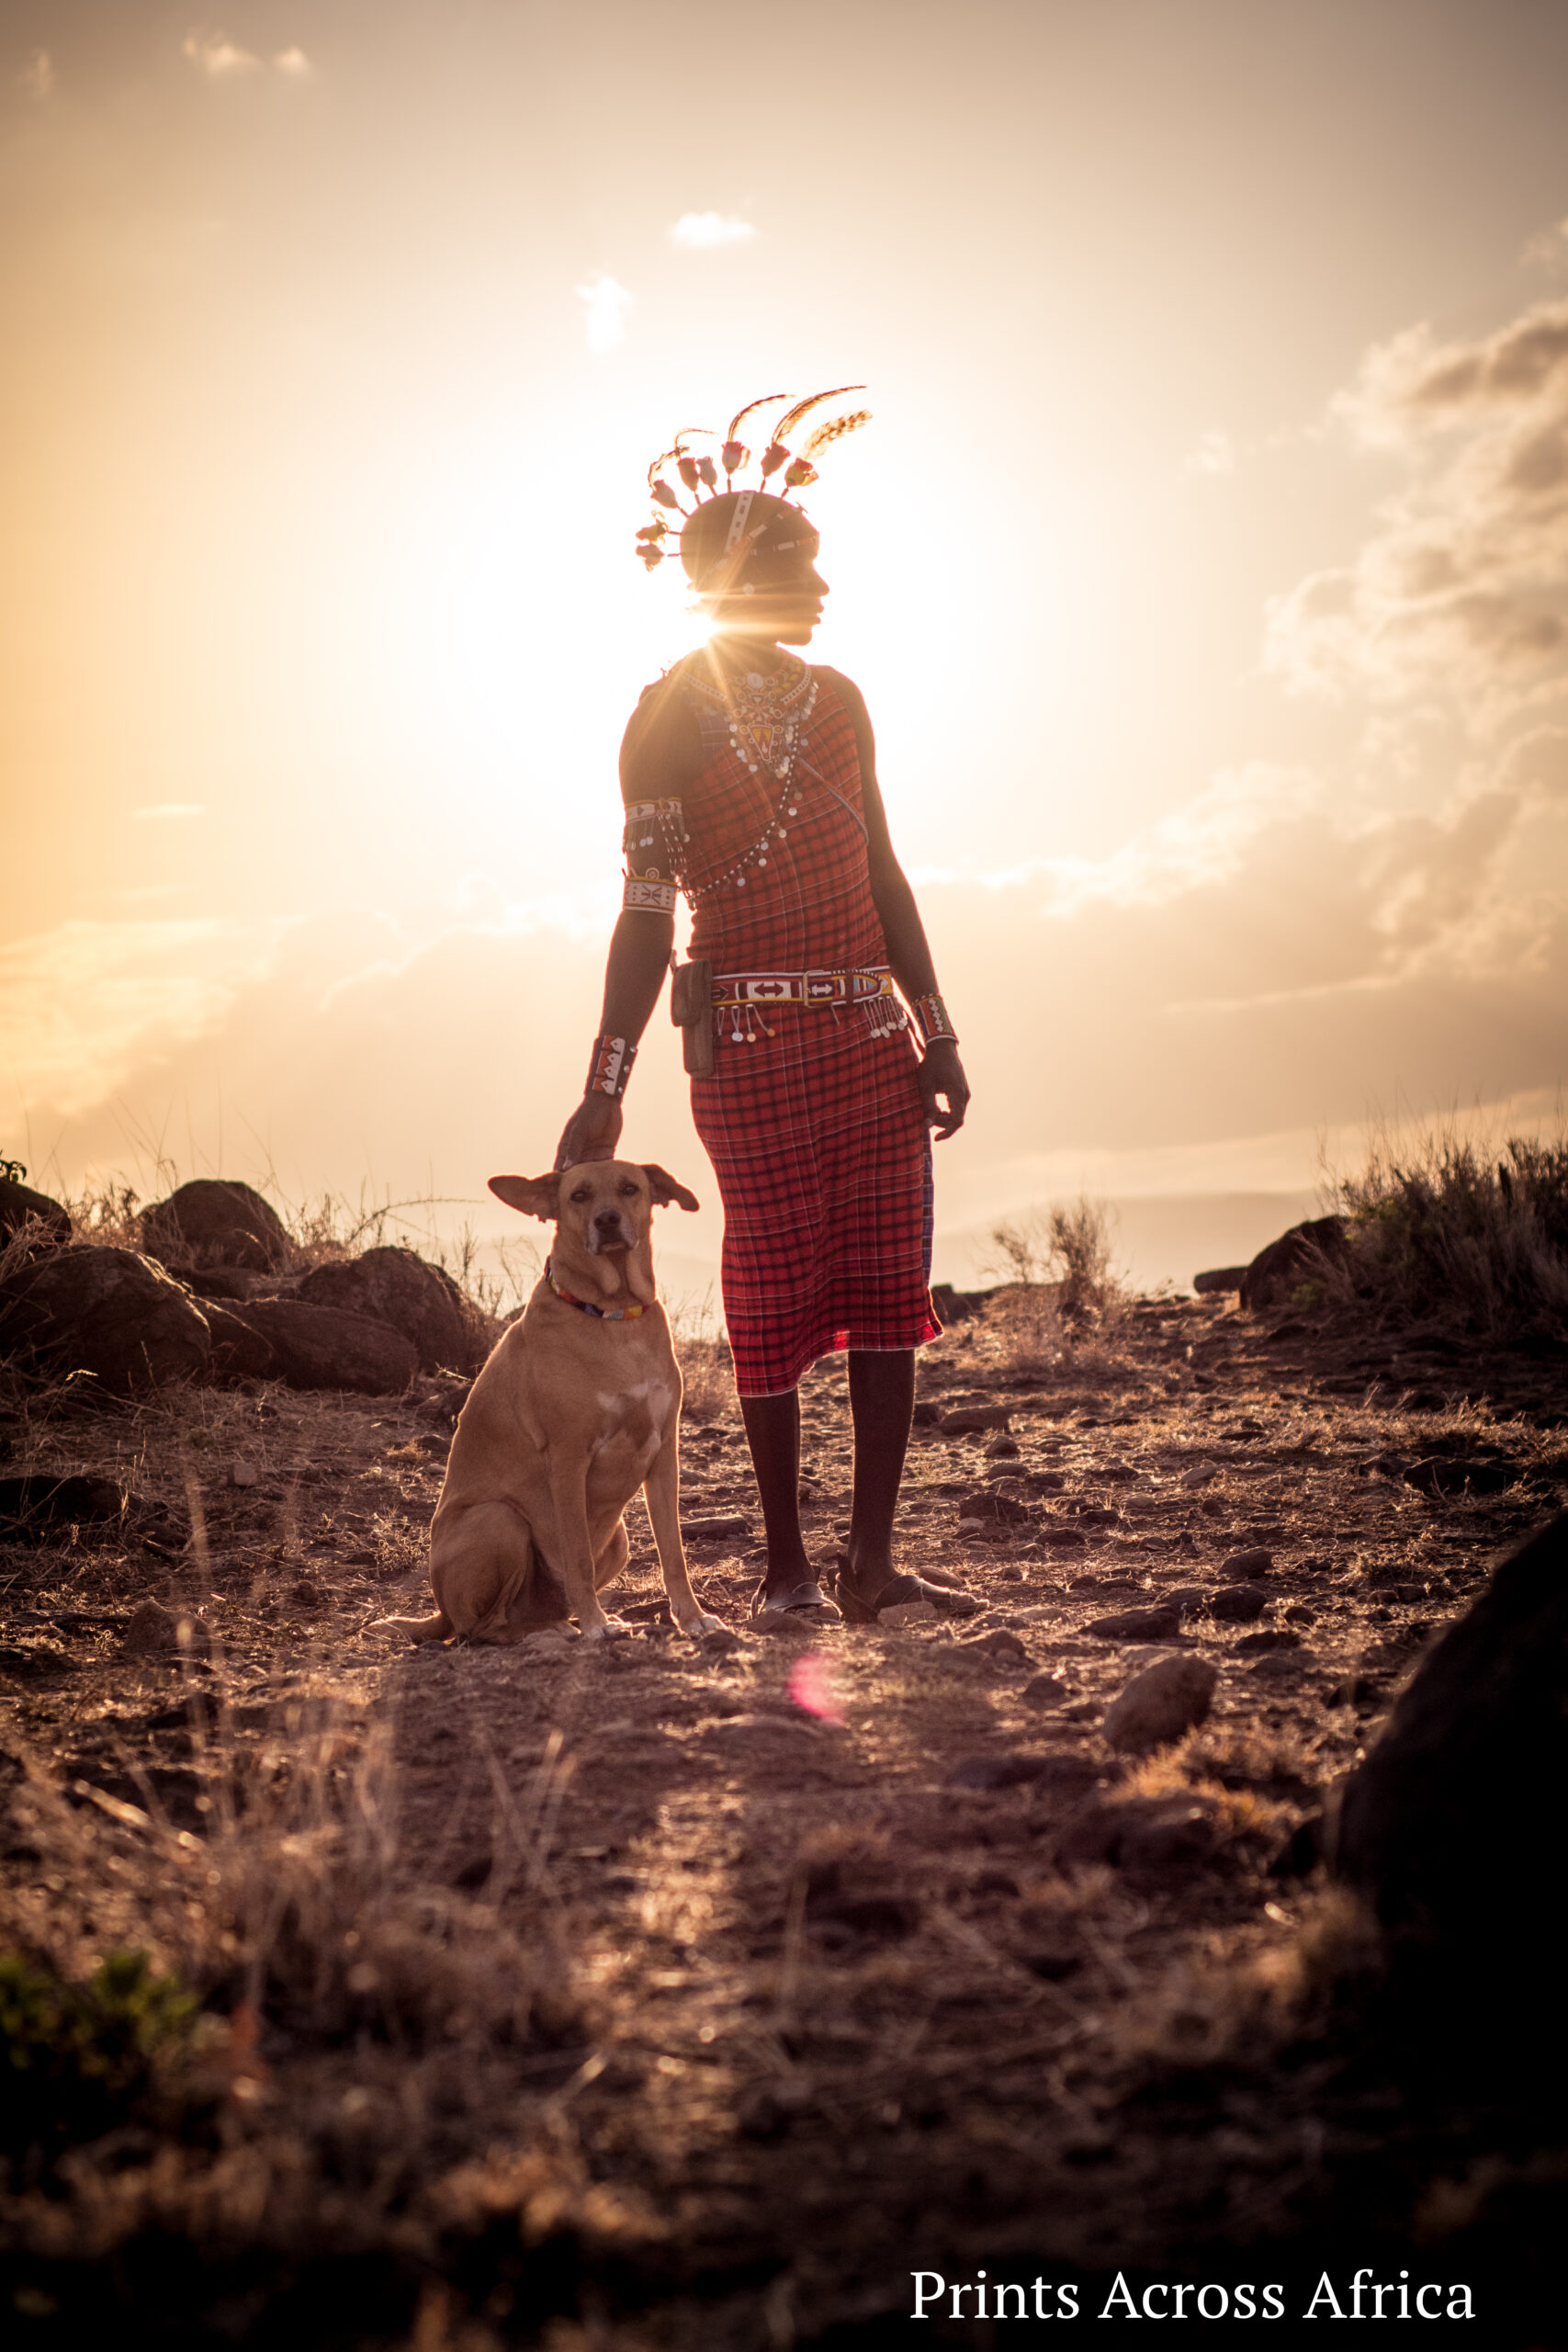 A Samburu and a dog